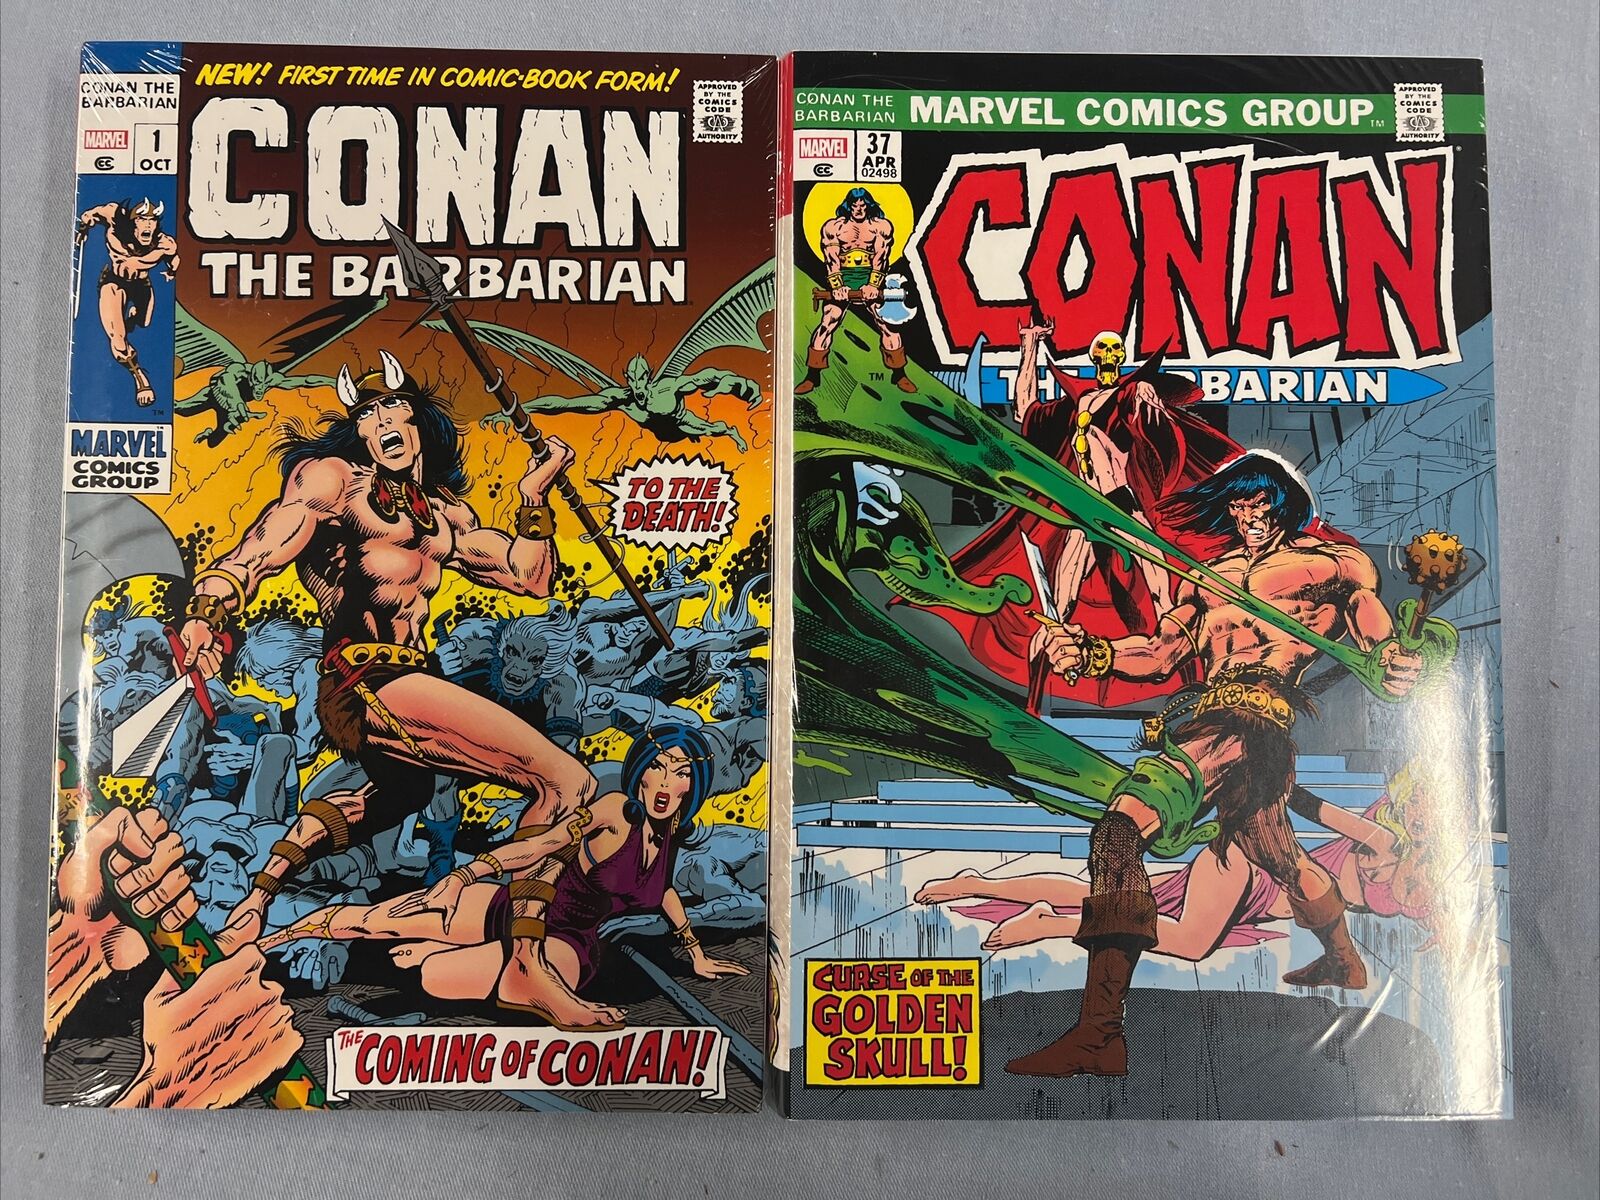 Marvel Comics CONAN BARBARIAN Omnibus Vol #1 and 2 DM Cover (2020) Global Ship